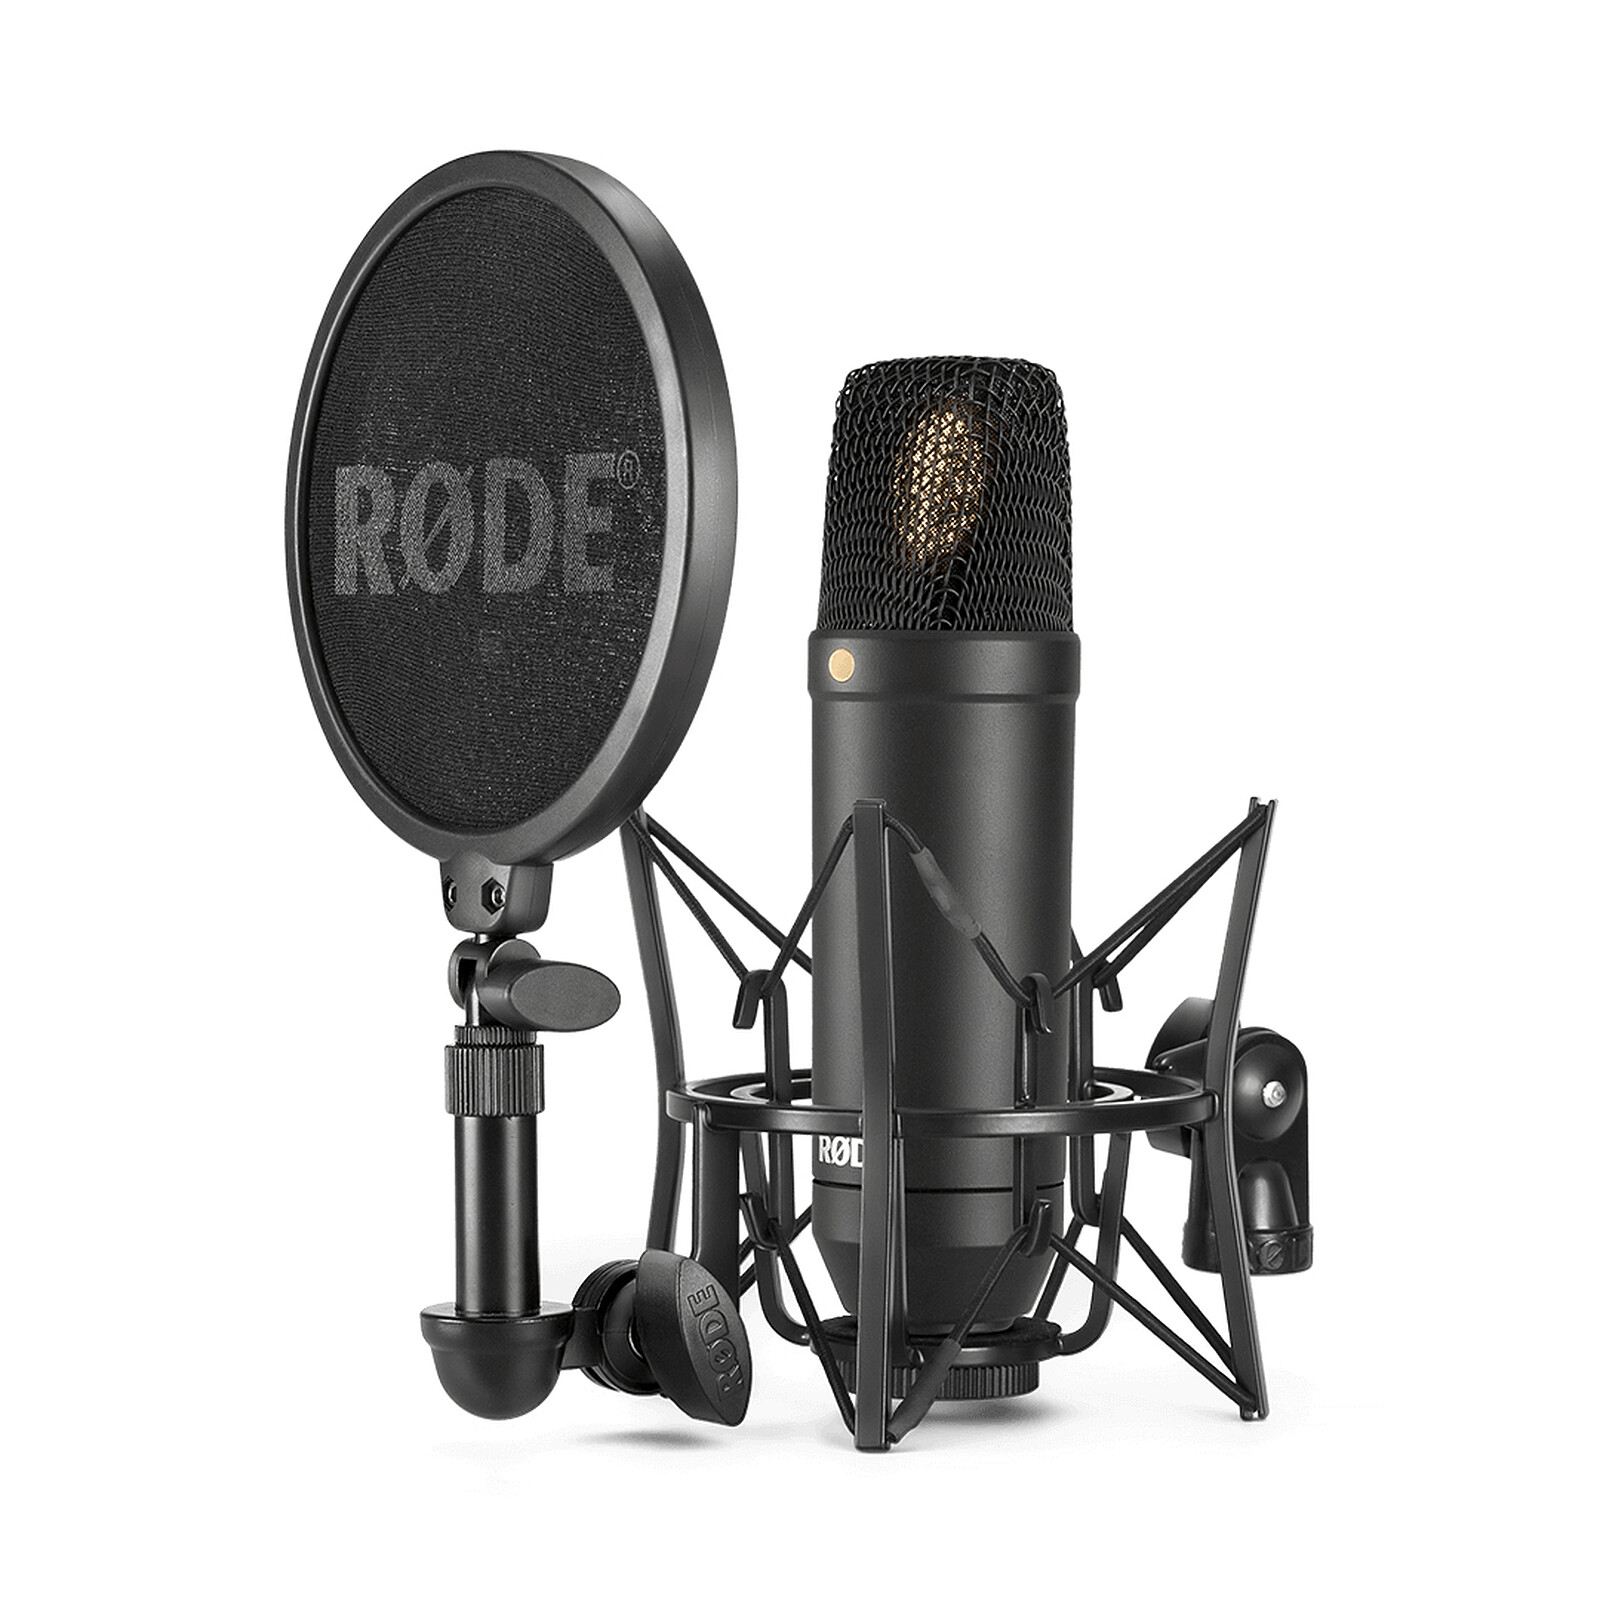 Bird Instruments Singer Pack - Microphone - Garantie 3 ans LDLC